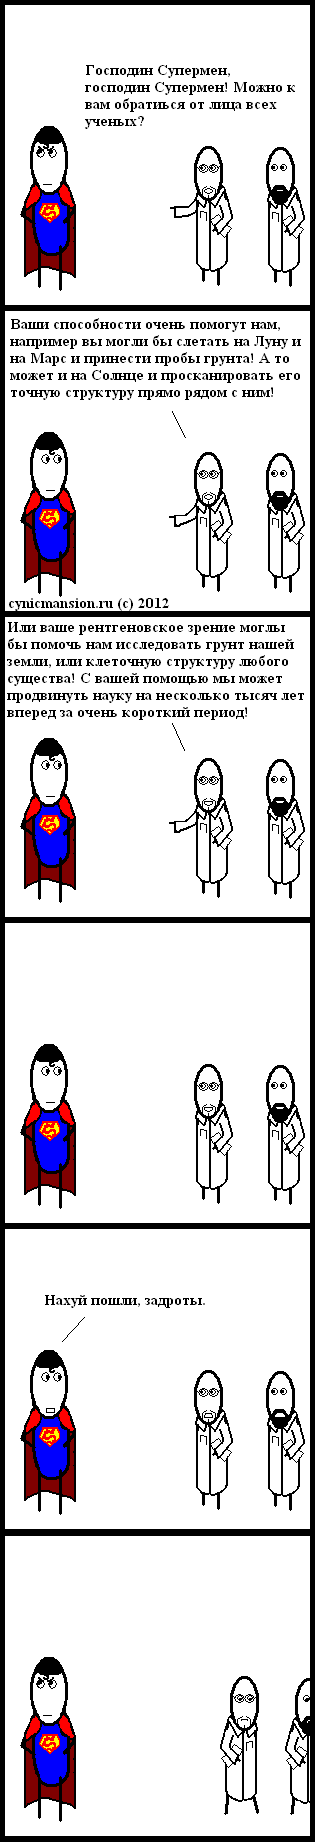 Супермено-научное